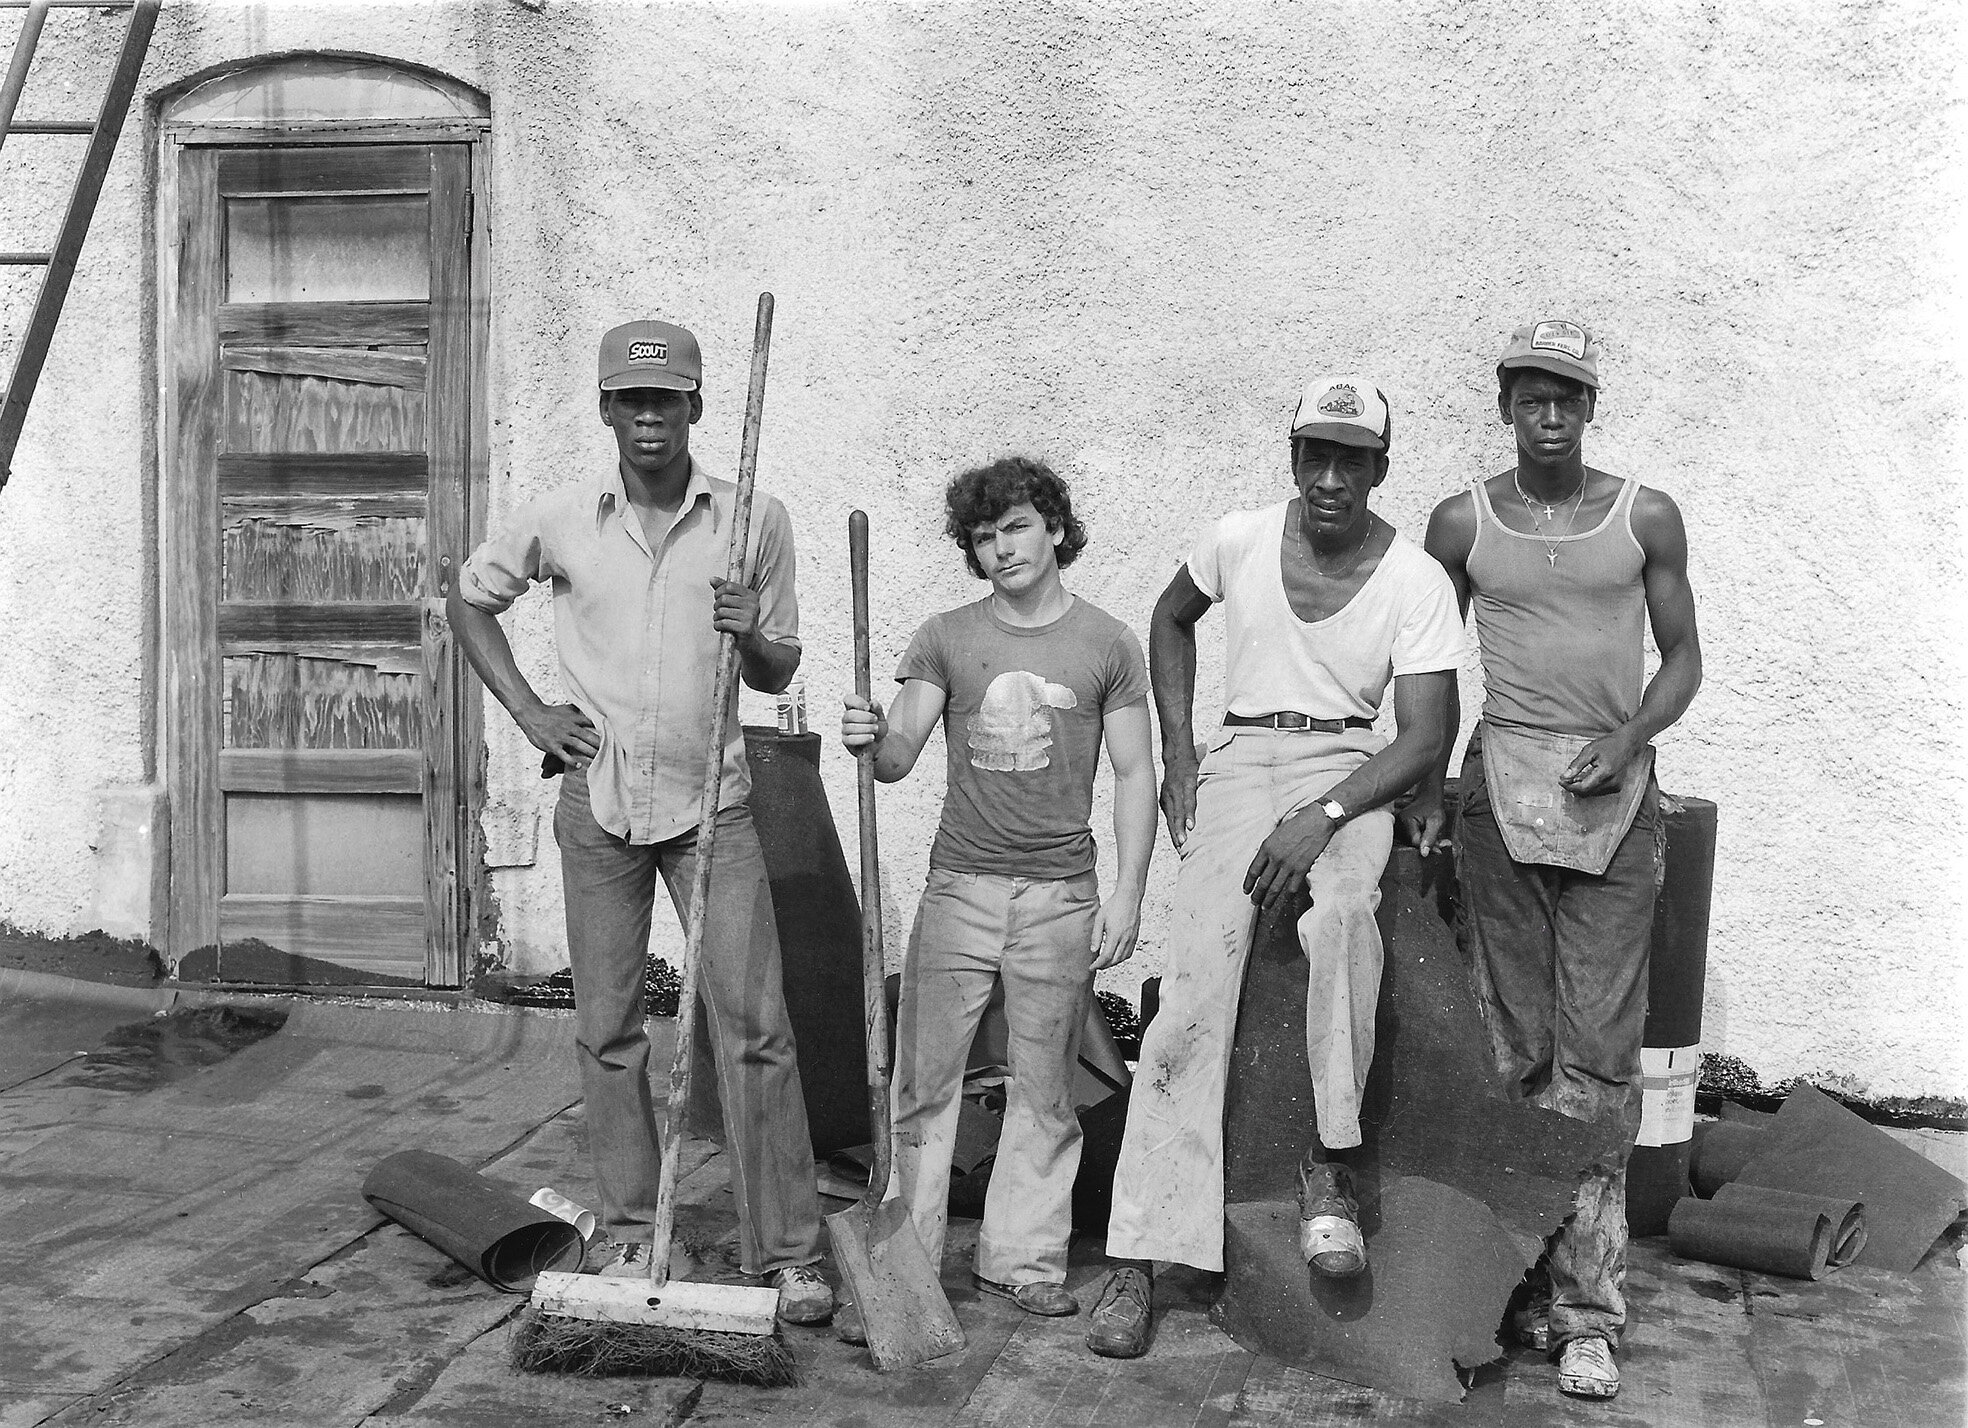   Roofing Crew, Bon Air Hotel, Bainbridge, GA,  1980   Gelatin silver print 7 1/2 x 10 1/4 in. (image size)   The Do Good Fund, Inc., 2020-077 